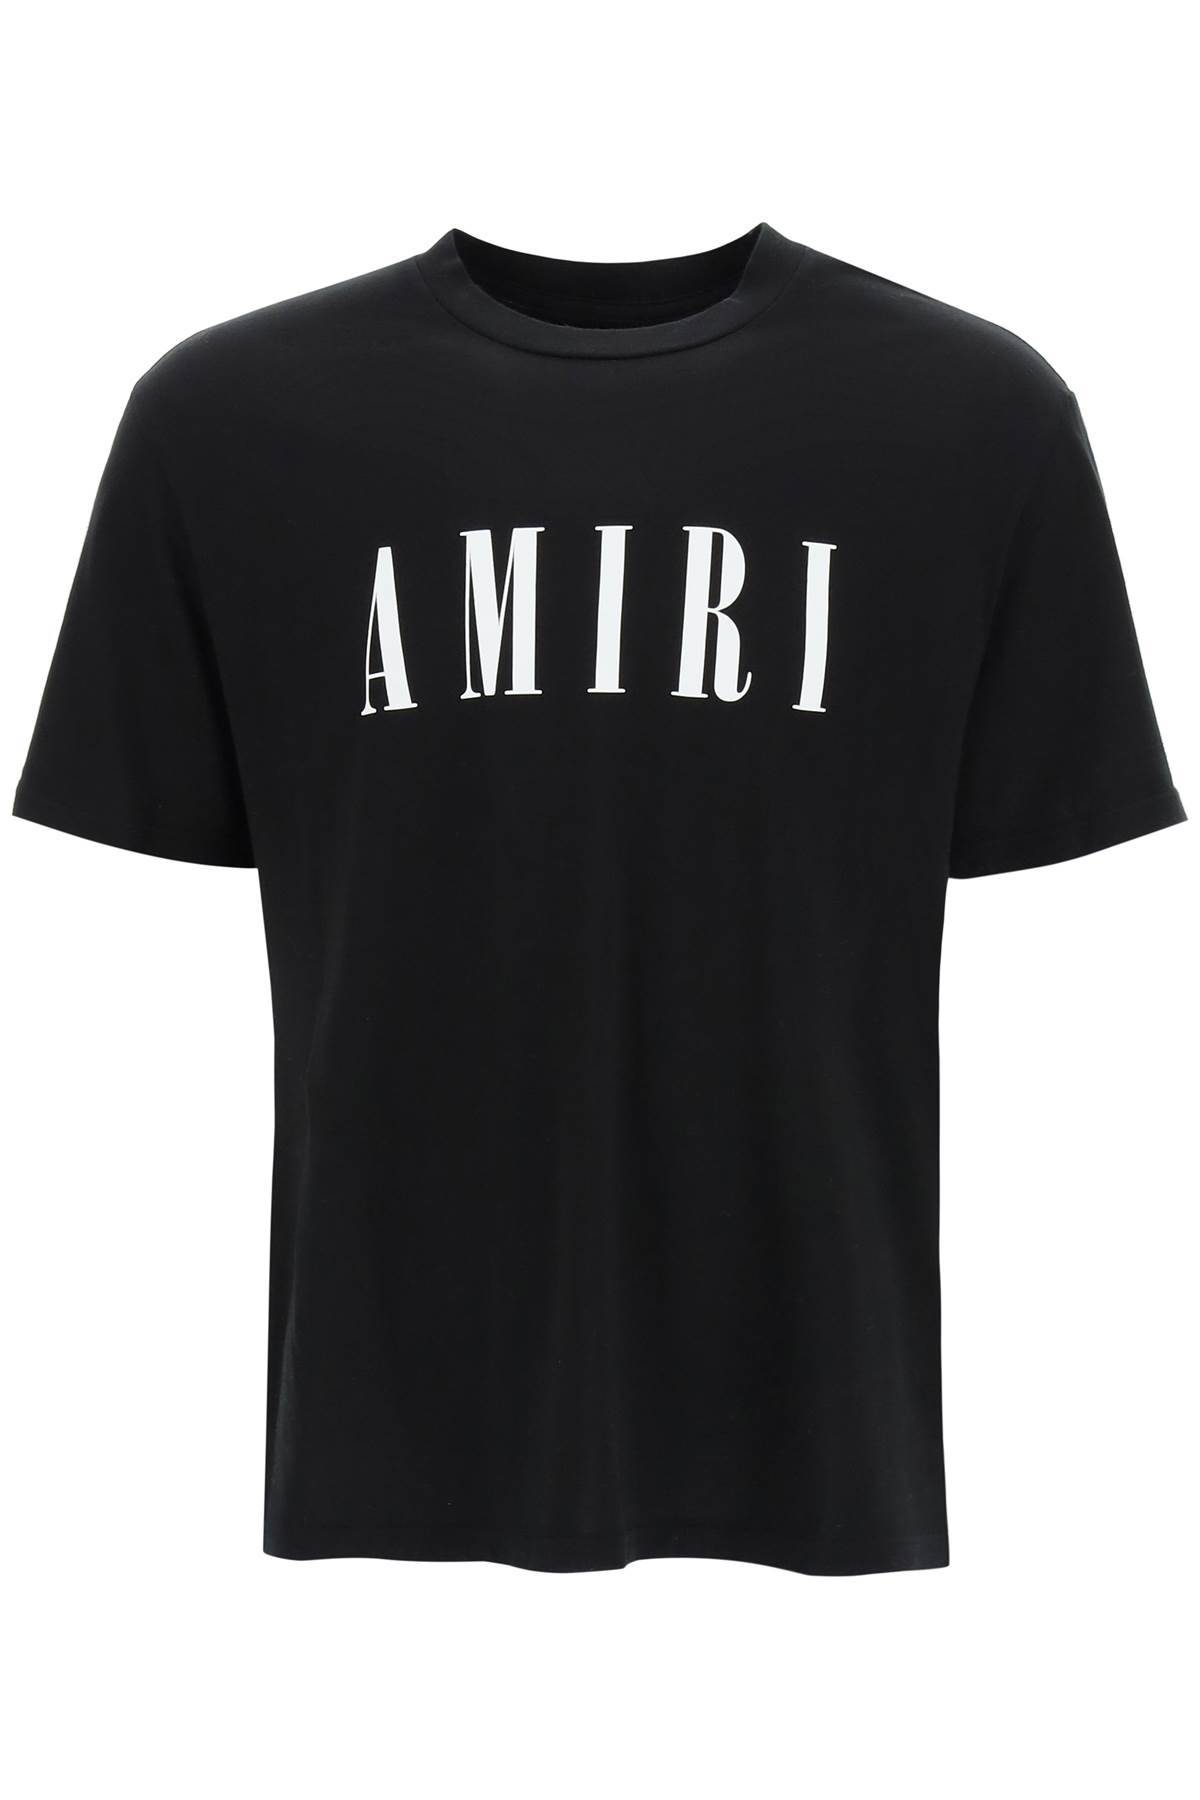 Amiri AMIRI core logo t-shirt